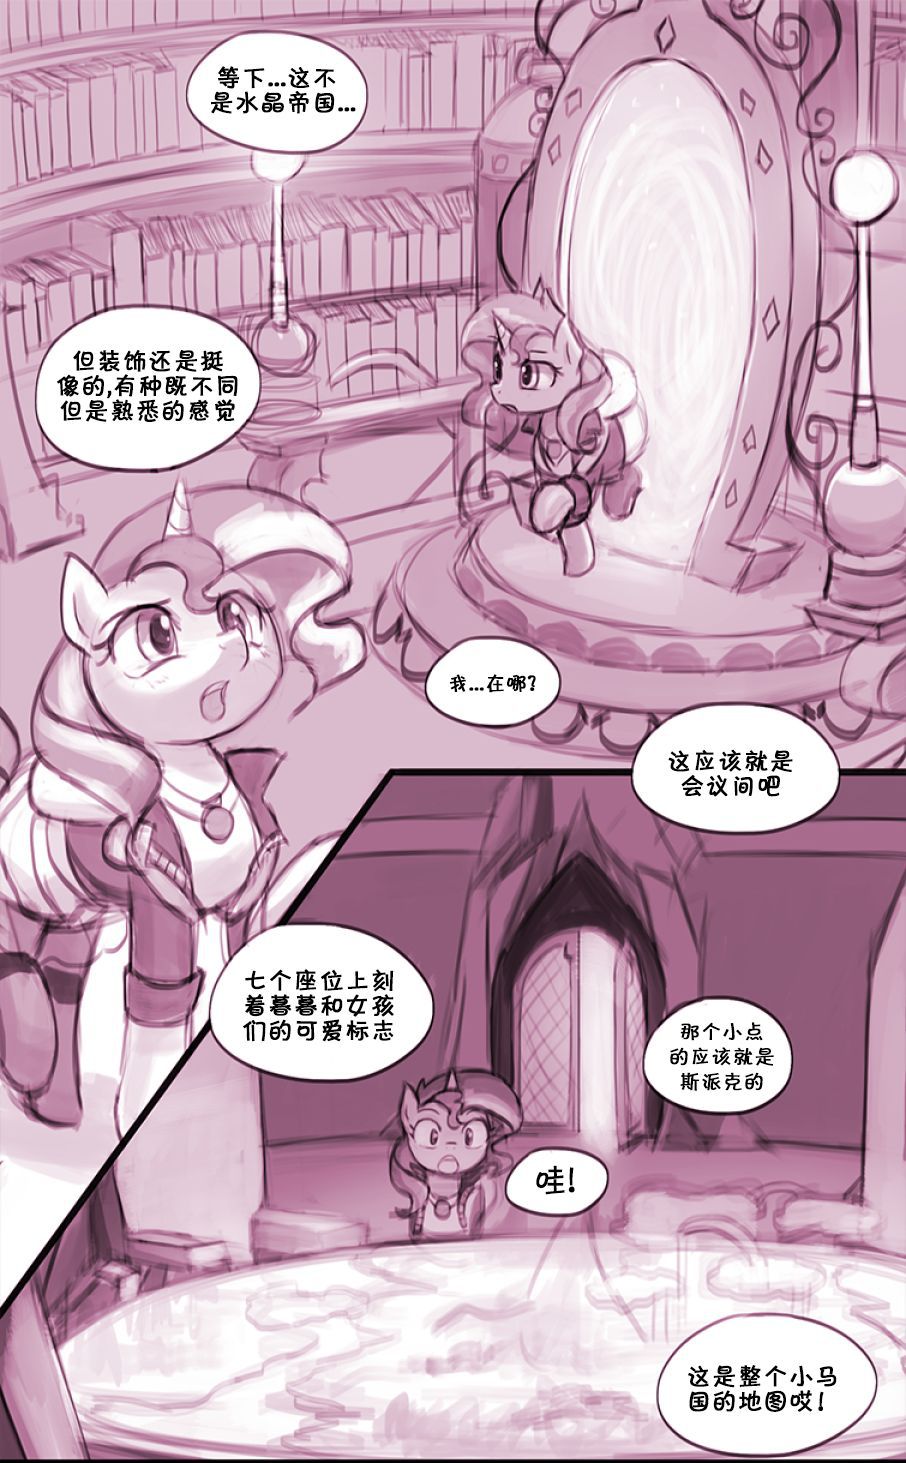 [Lumineko] Homesick | 吾心归处是吾乡 (My Little Pony: Friendship is Magic) [Chinese] [PhoenixTranslation] 【Lumineko】【PhoenixTranslation】Homesick 6